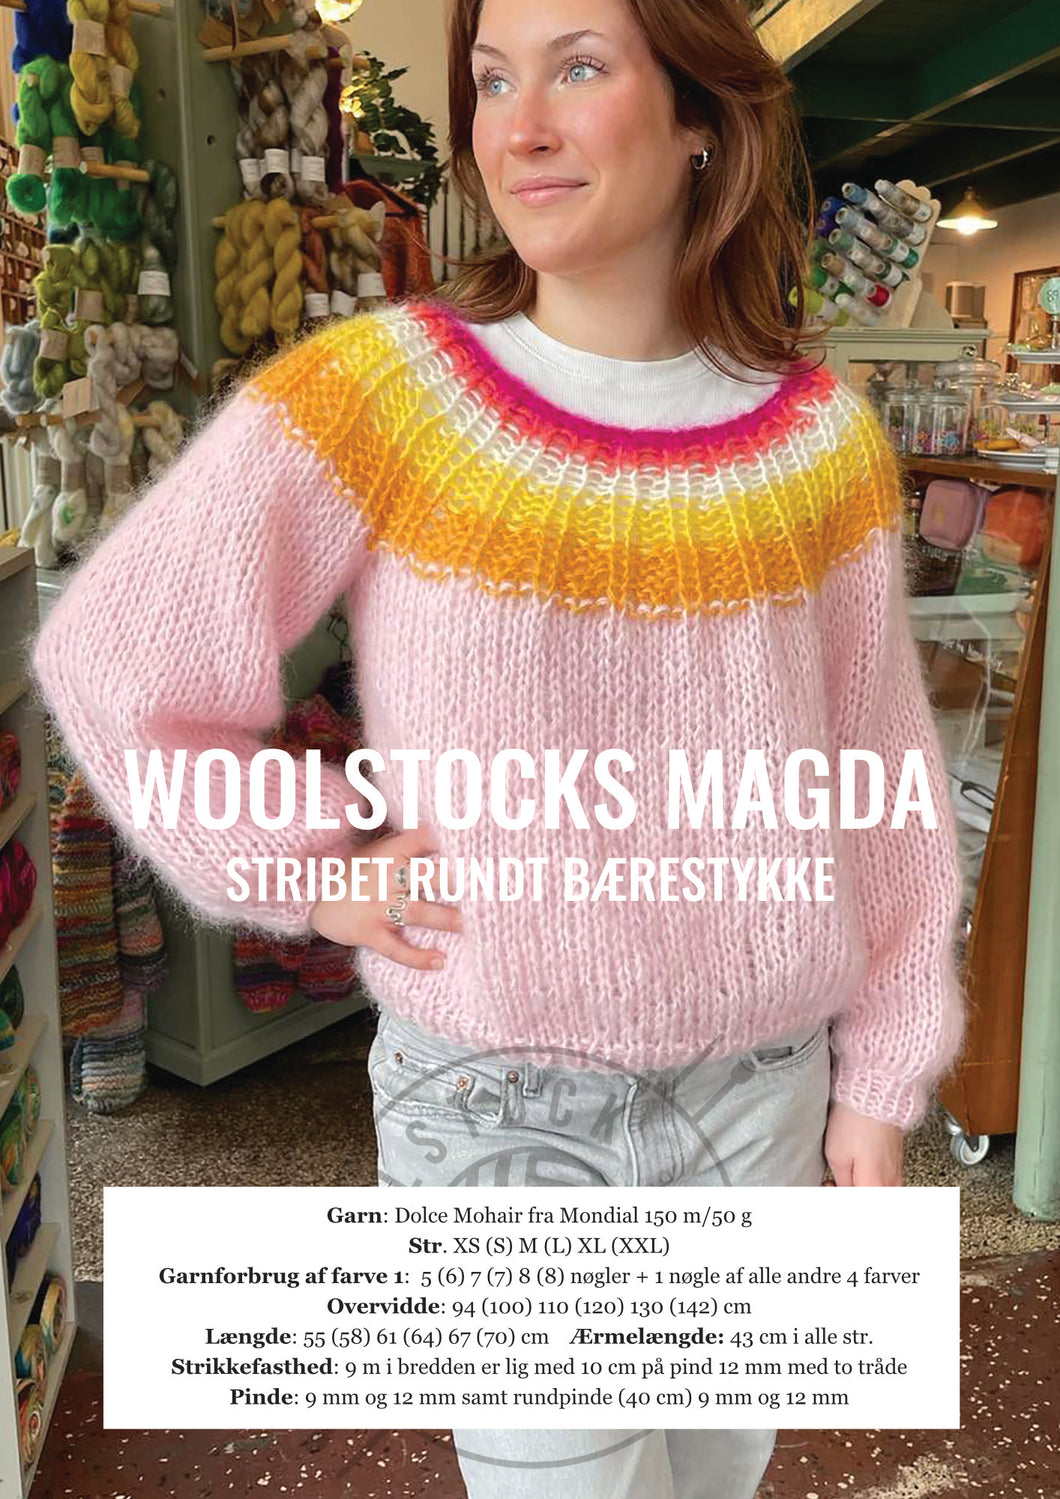 Woolstocks Magda